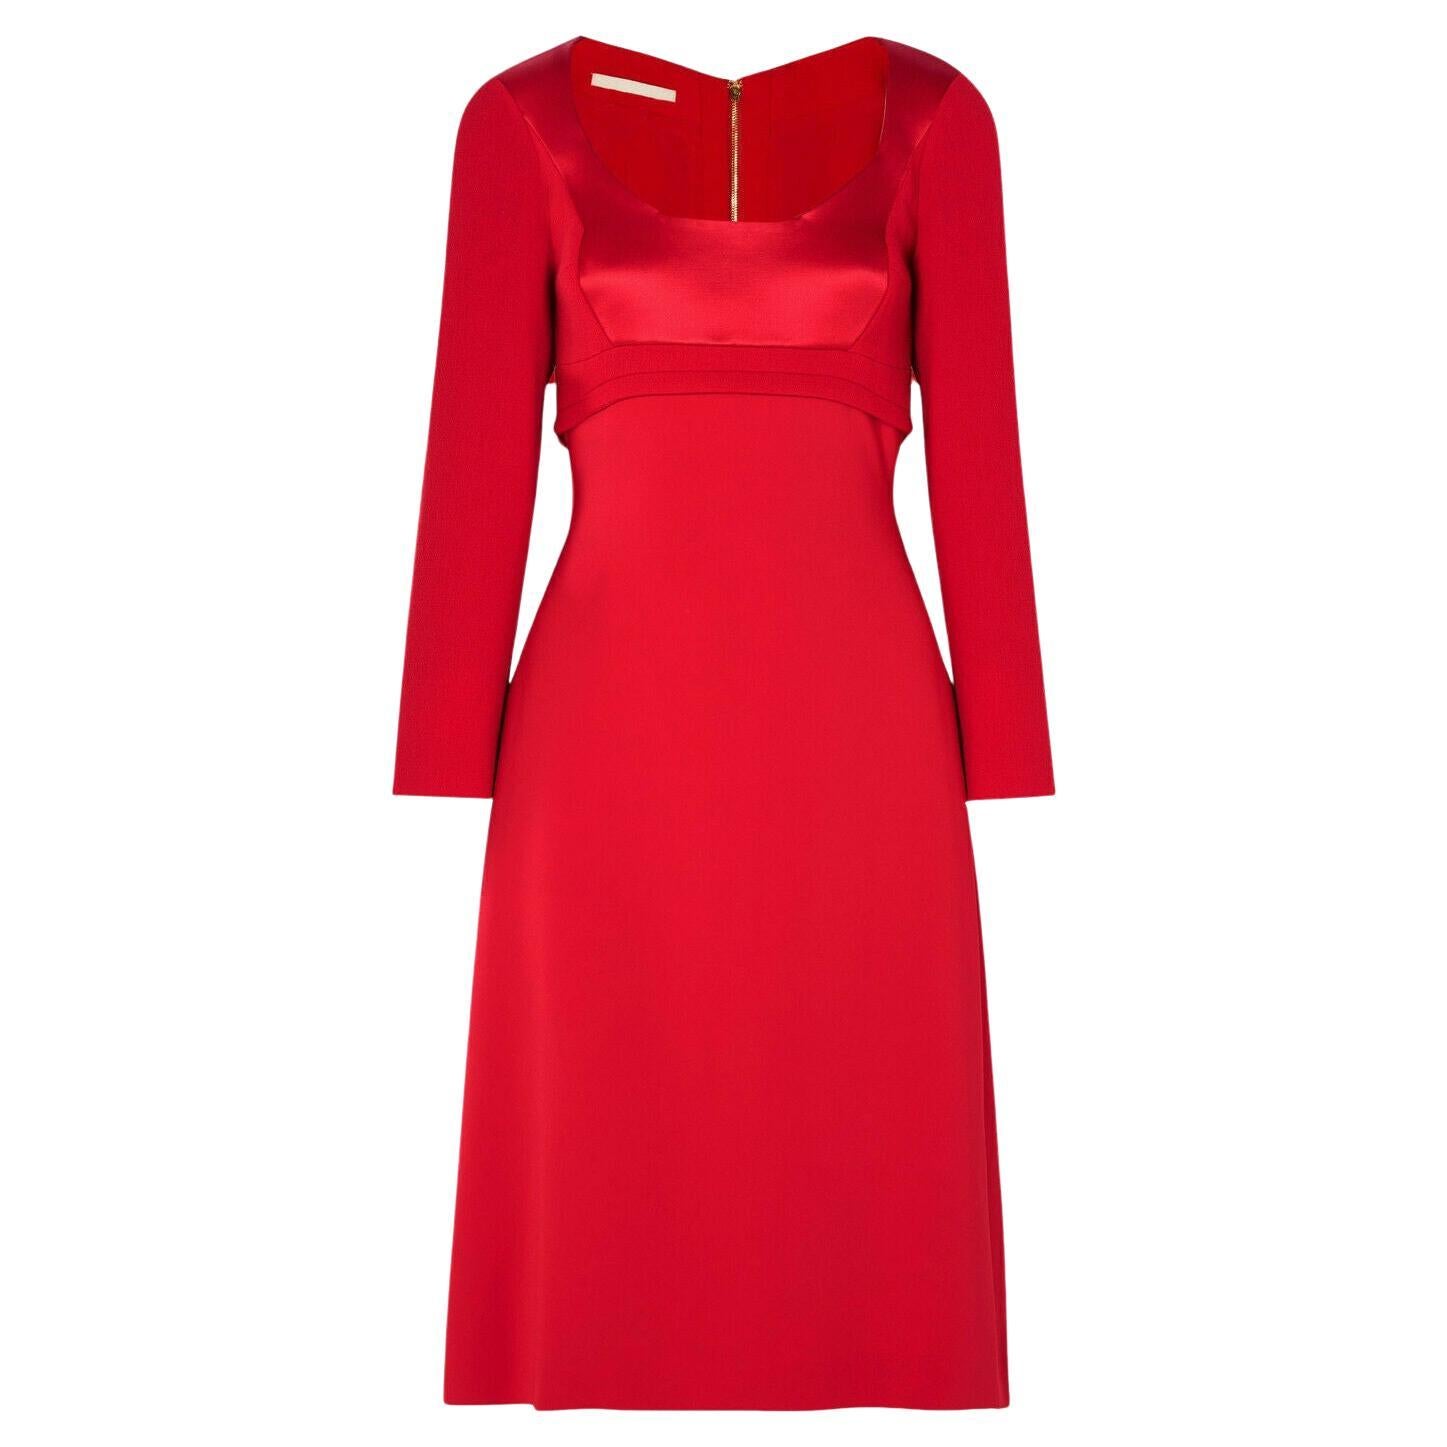 New Antonio Berardi Fire red dress size IT-44, US-8 For Sale